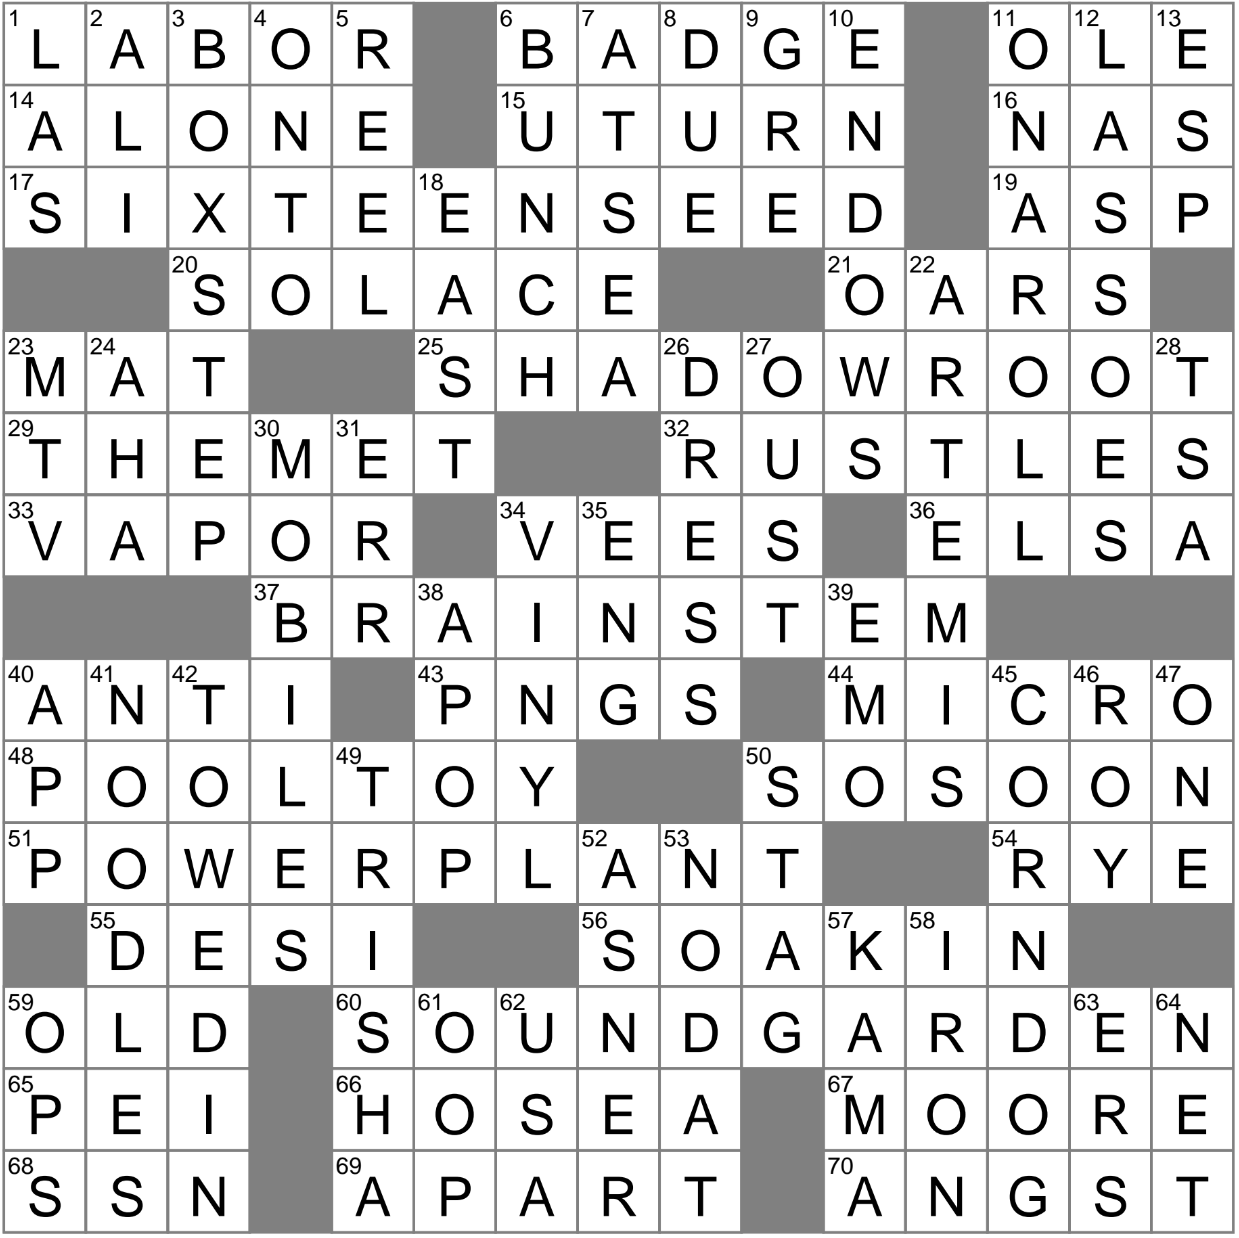 Crossword, Oct. 13, Puzzles